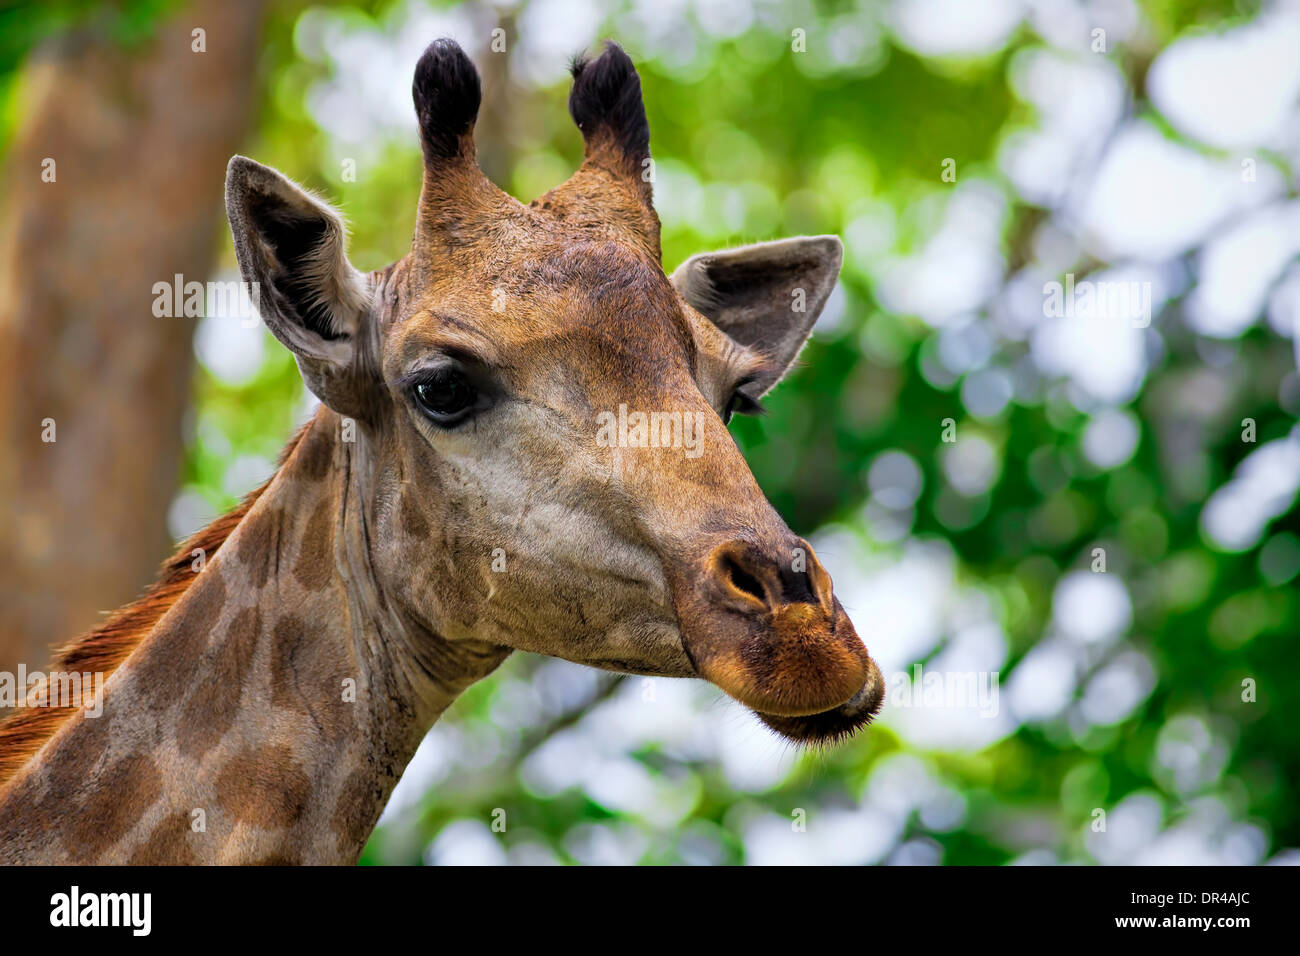 Giraffe portrait Stock Photo